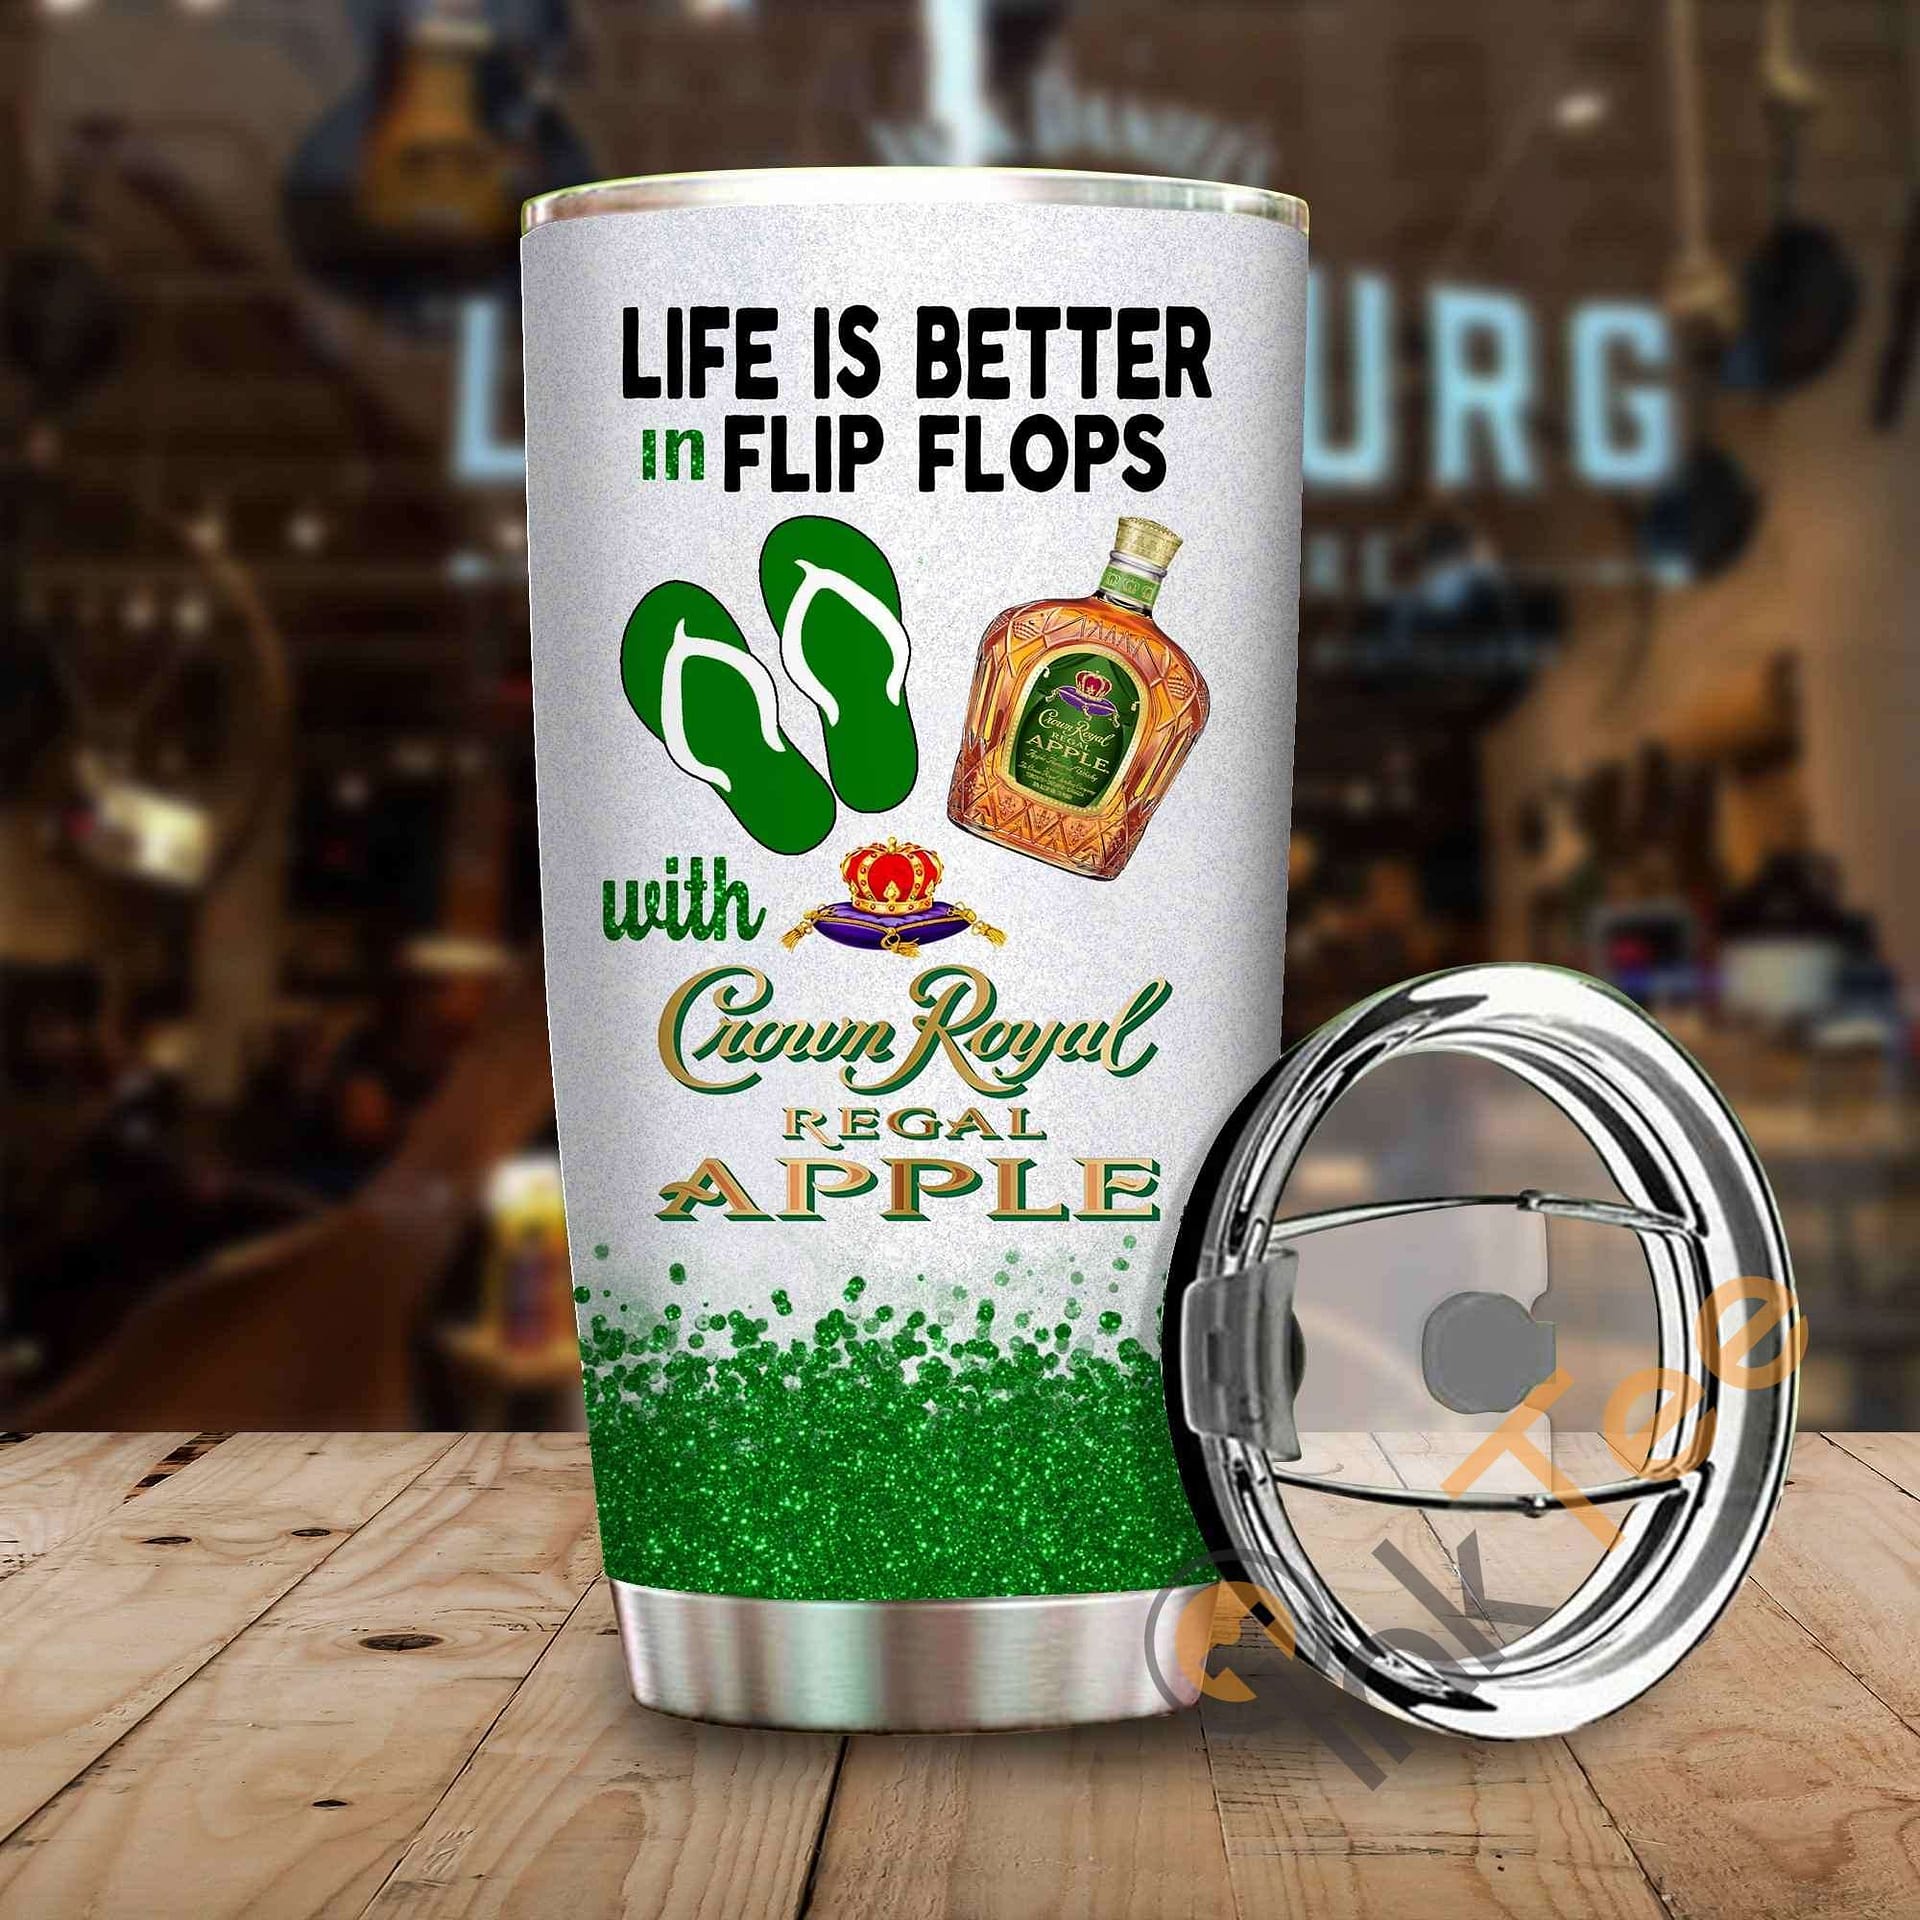 Life Is Better In Flip Flops With Crown Royal Regal Apple Amazon Best Seller Sku 3980 Stainless Steel Tumbler